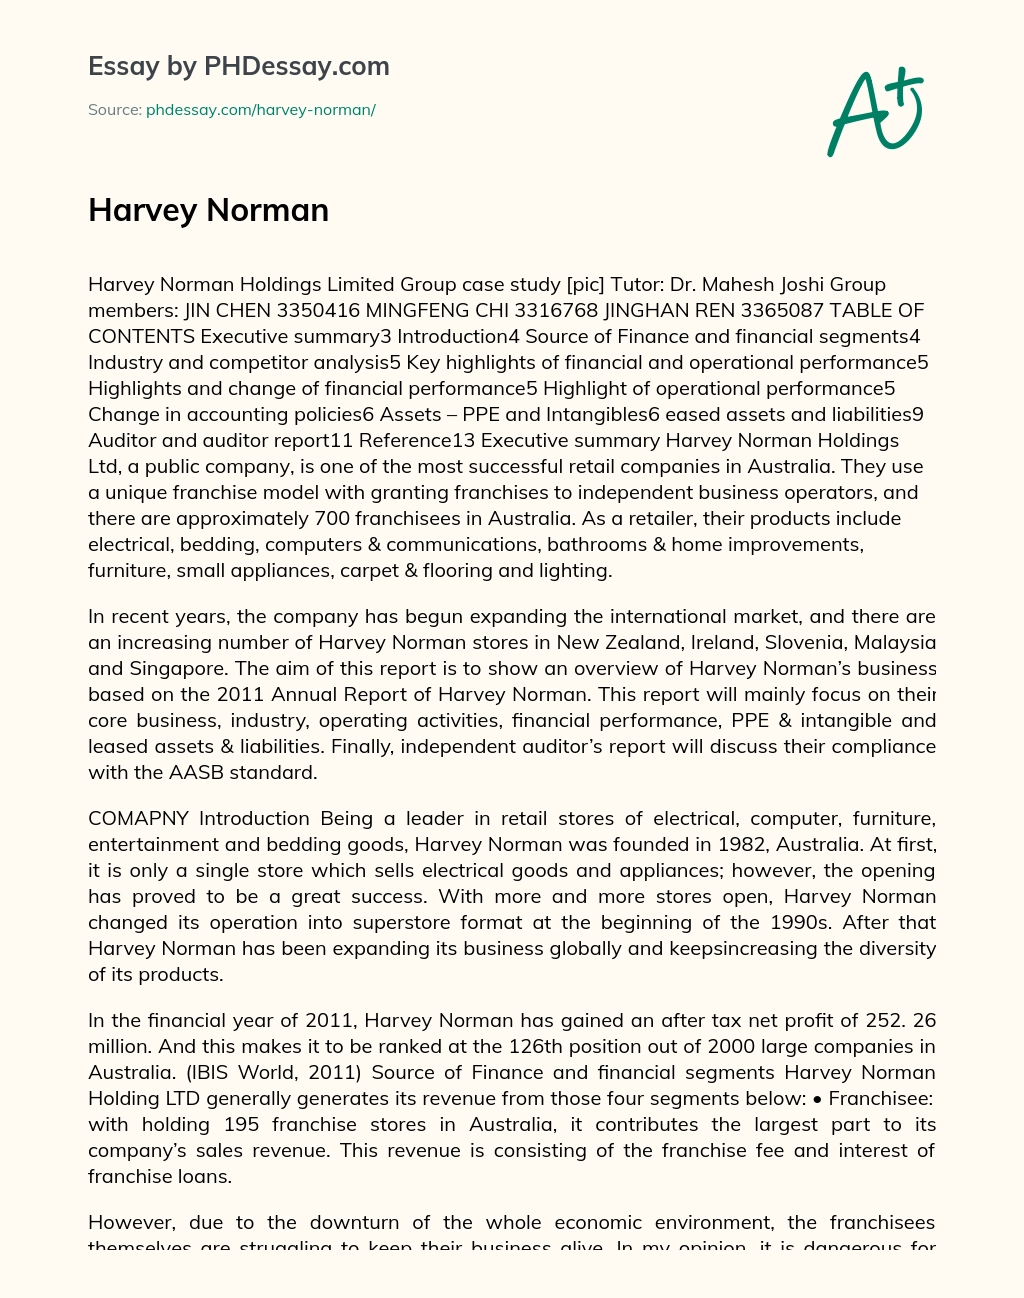 Harvey Norman essay